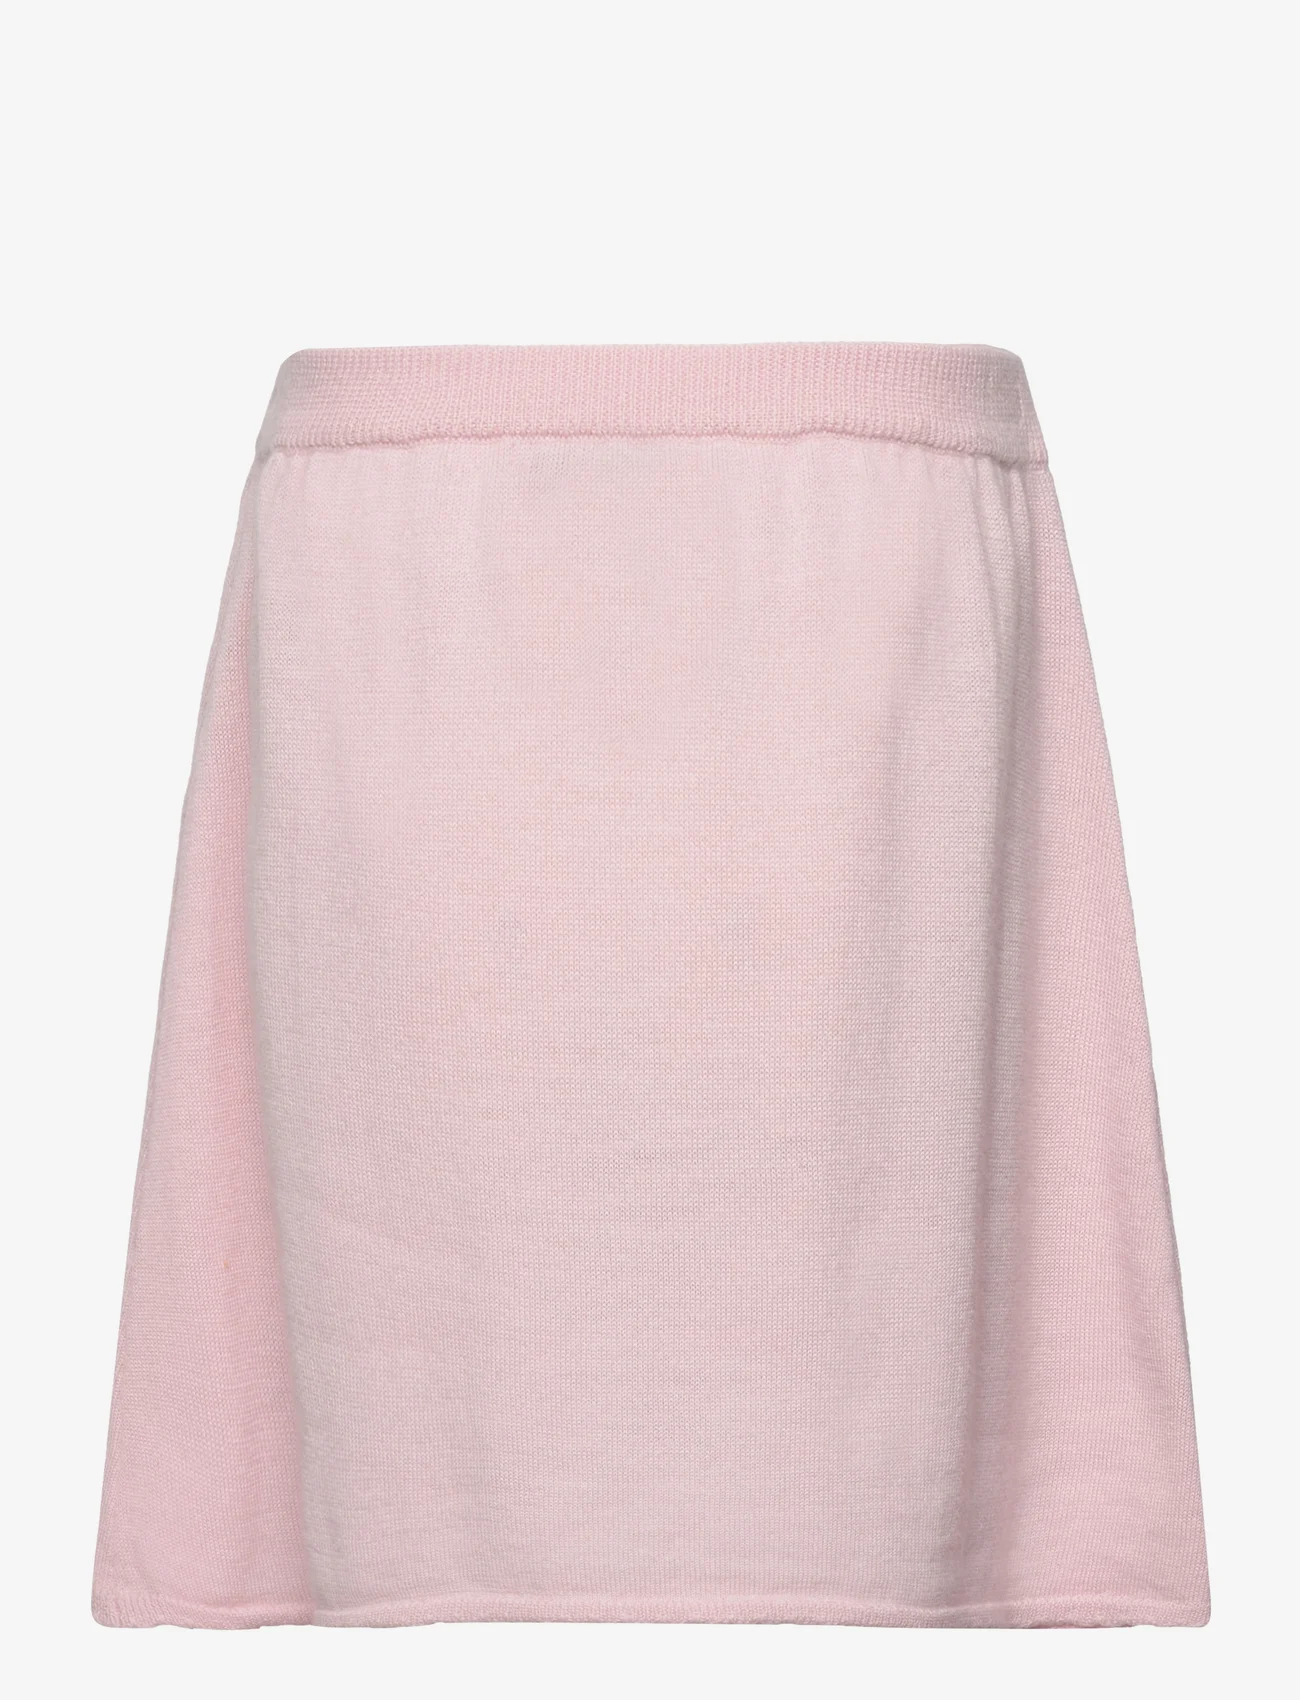 Copenhagen Colors - SPEKTAKEL CLASSIC MERINO SKIRT - short skirts - bubblegum - 1